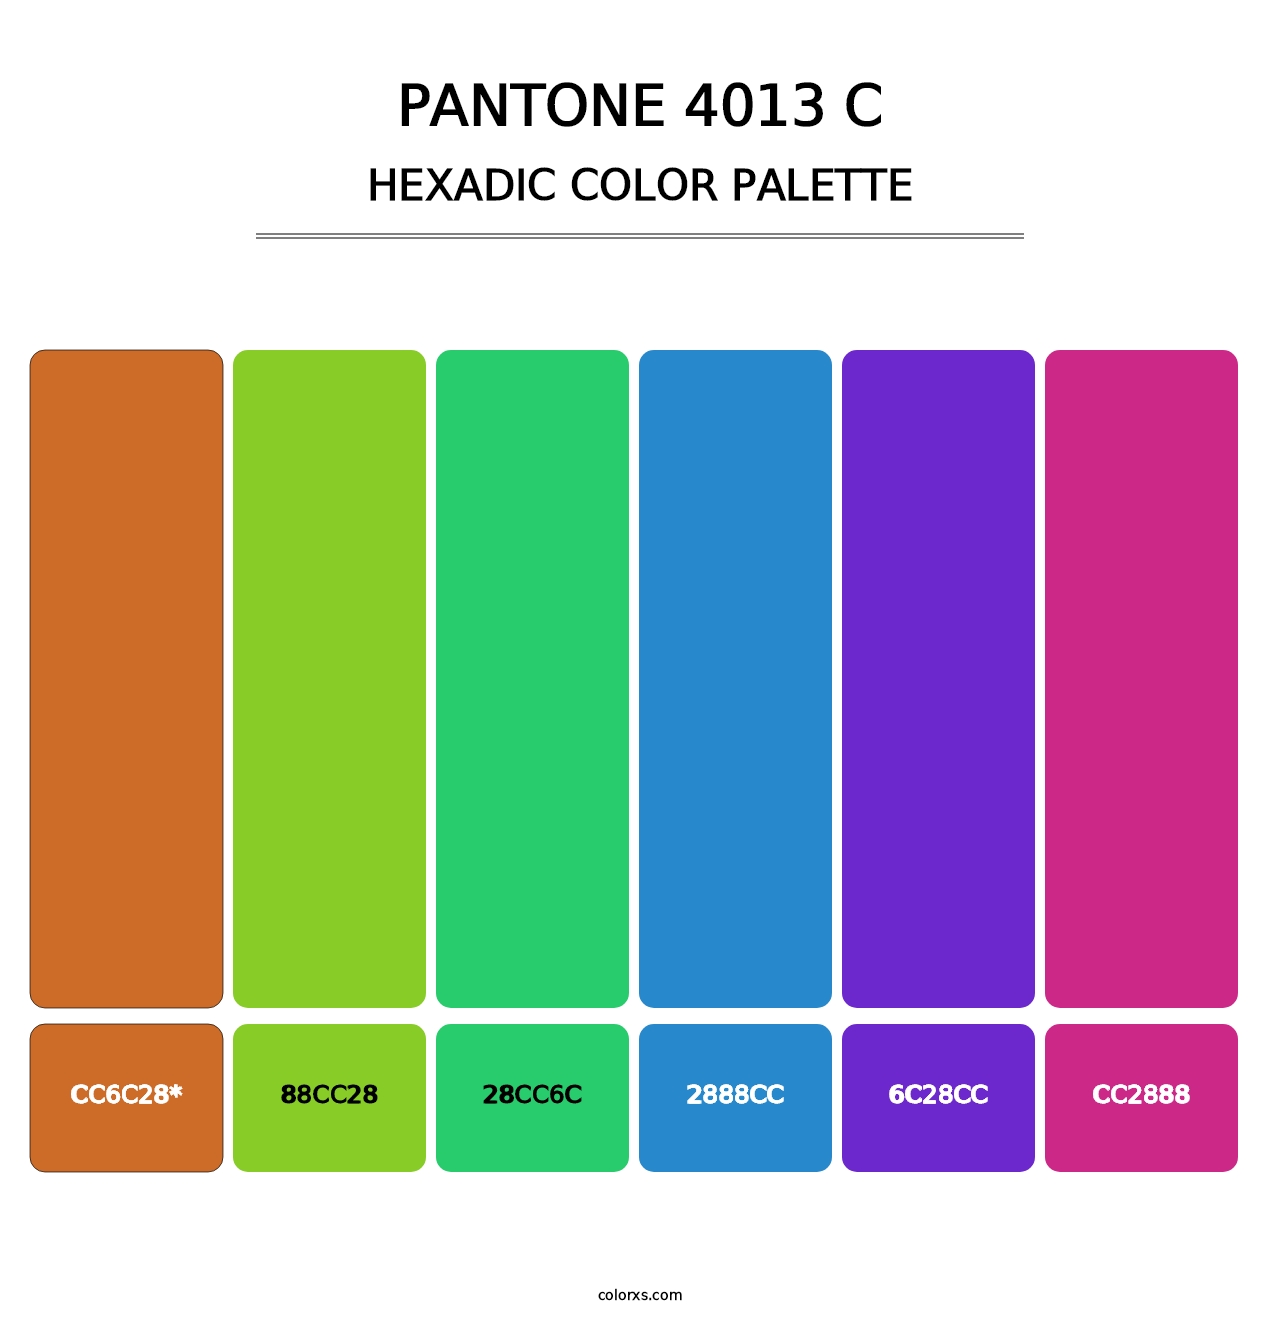 PANTONE 4013 C - Hexadic Color Palette